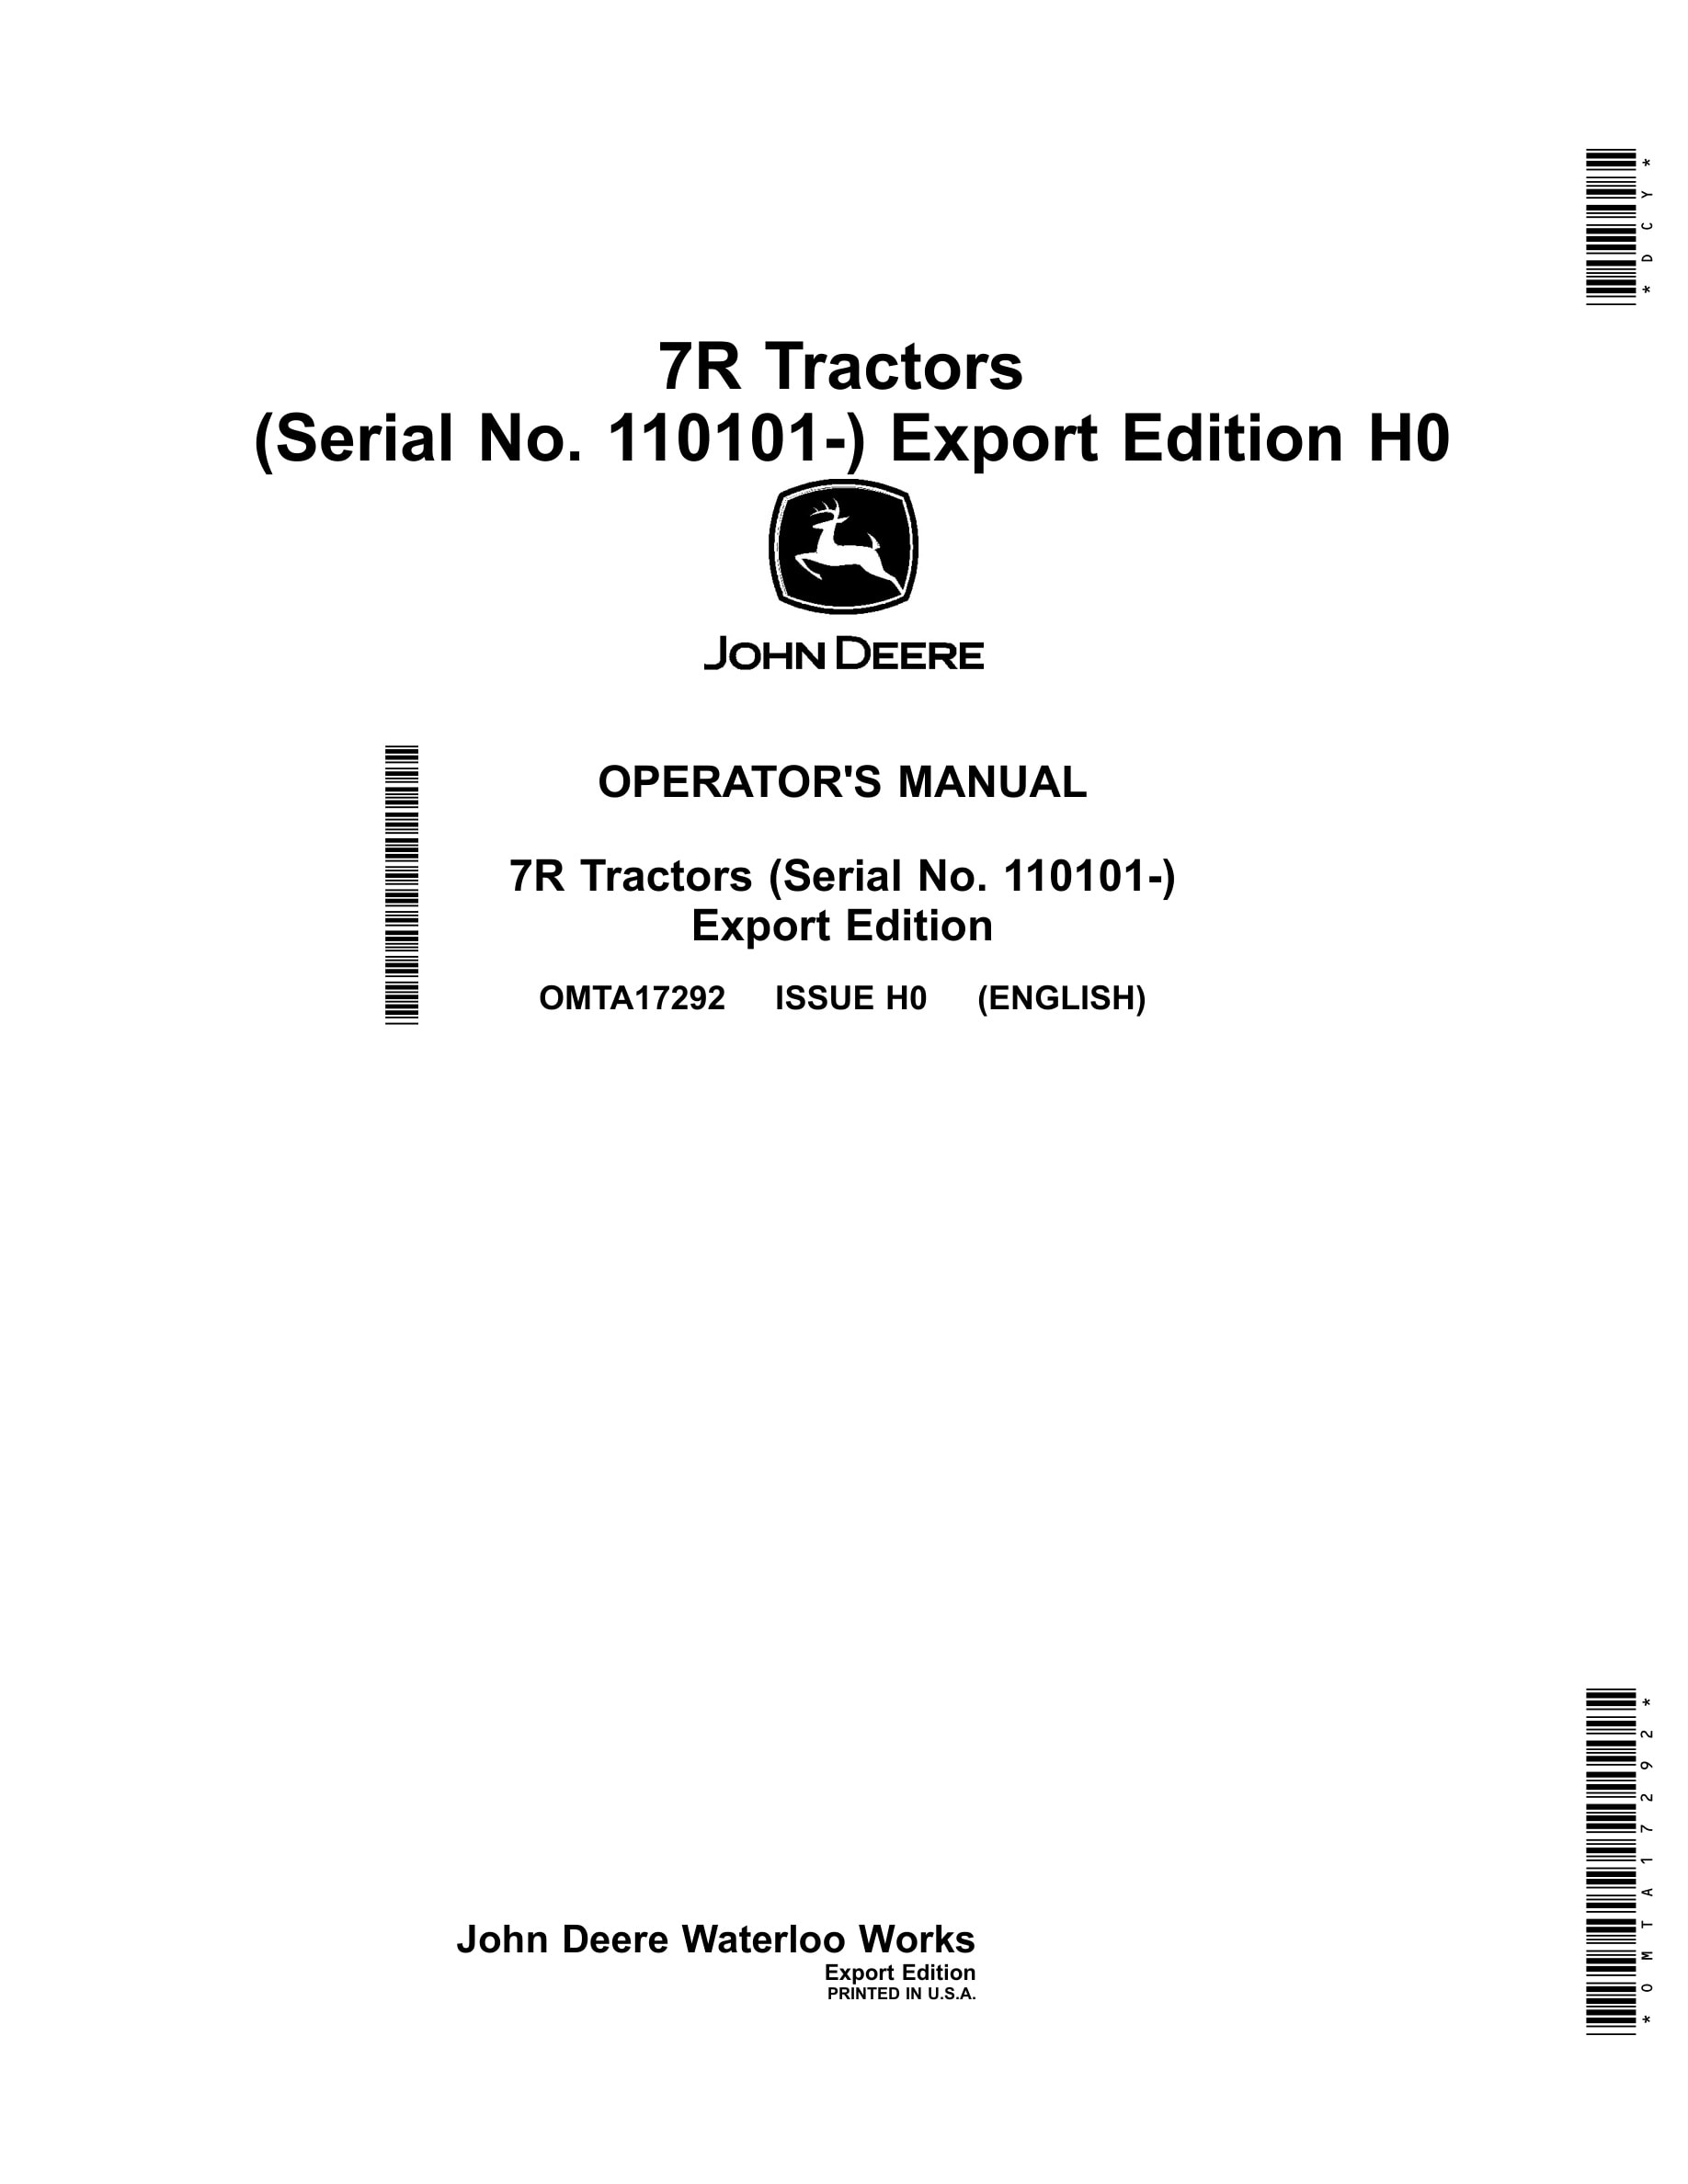 John Deere 7r Tractors Operator Manuals OMTA17292-1